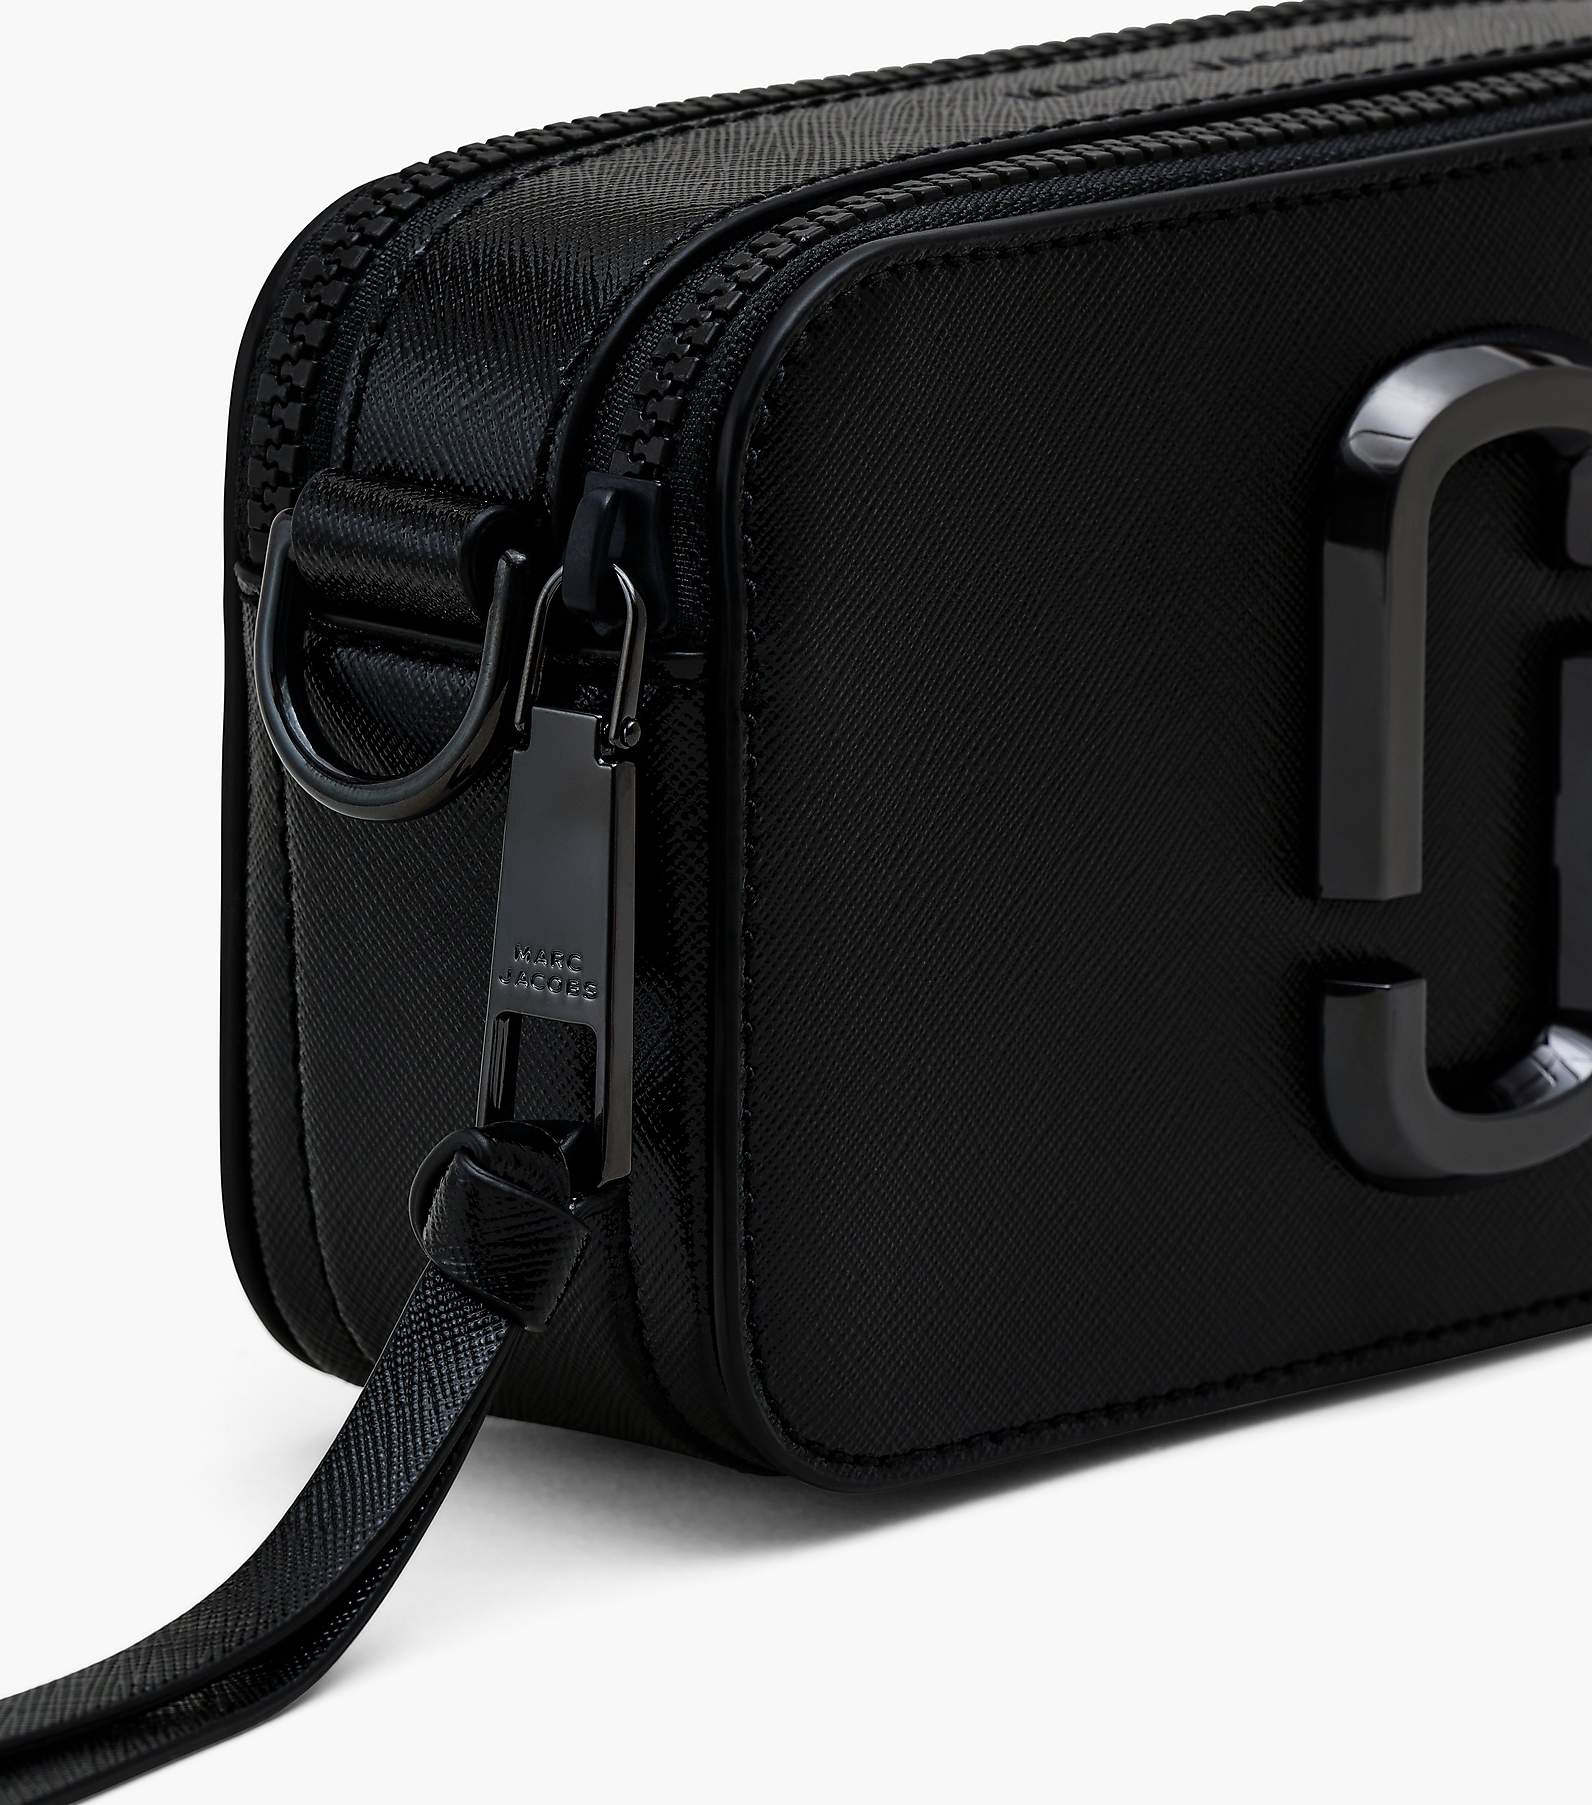  The Marc Jacobs Women's Snapshot DTM Camera Bag, Black